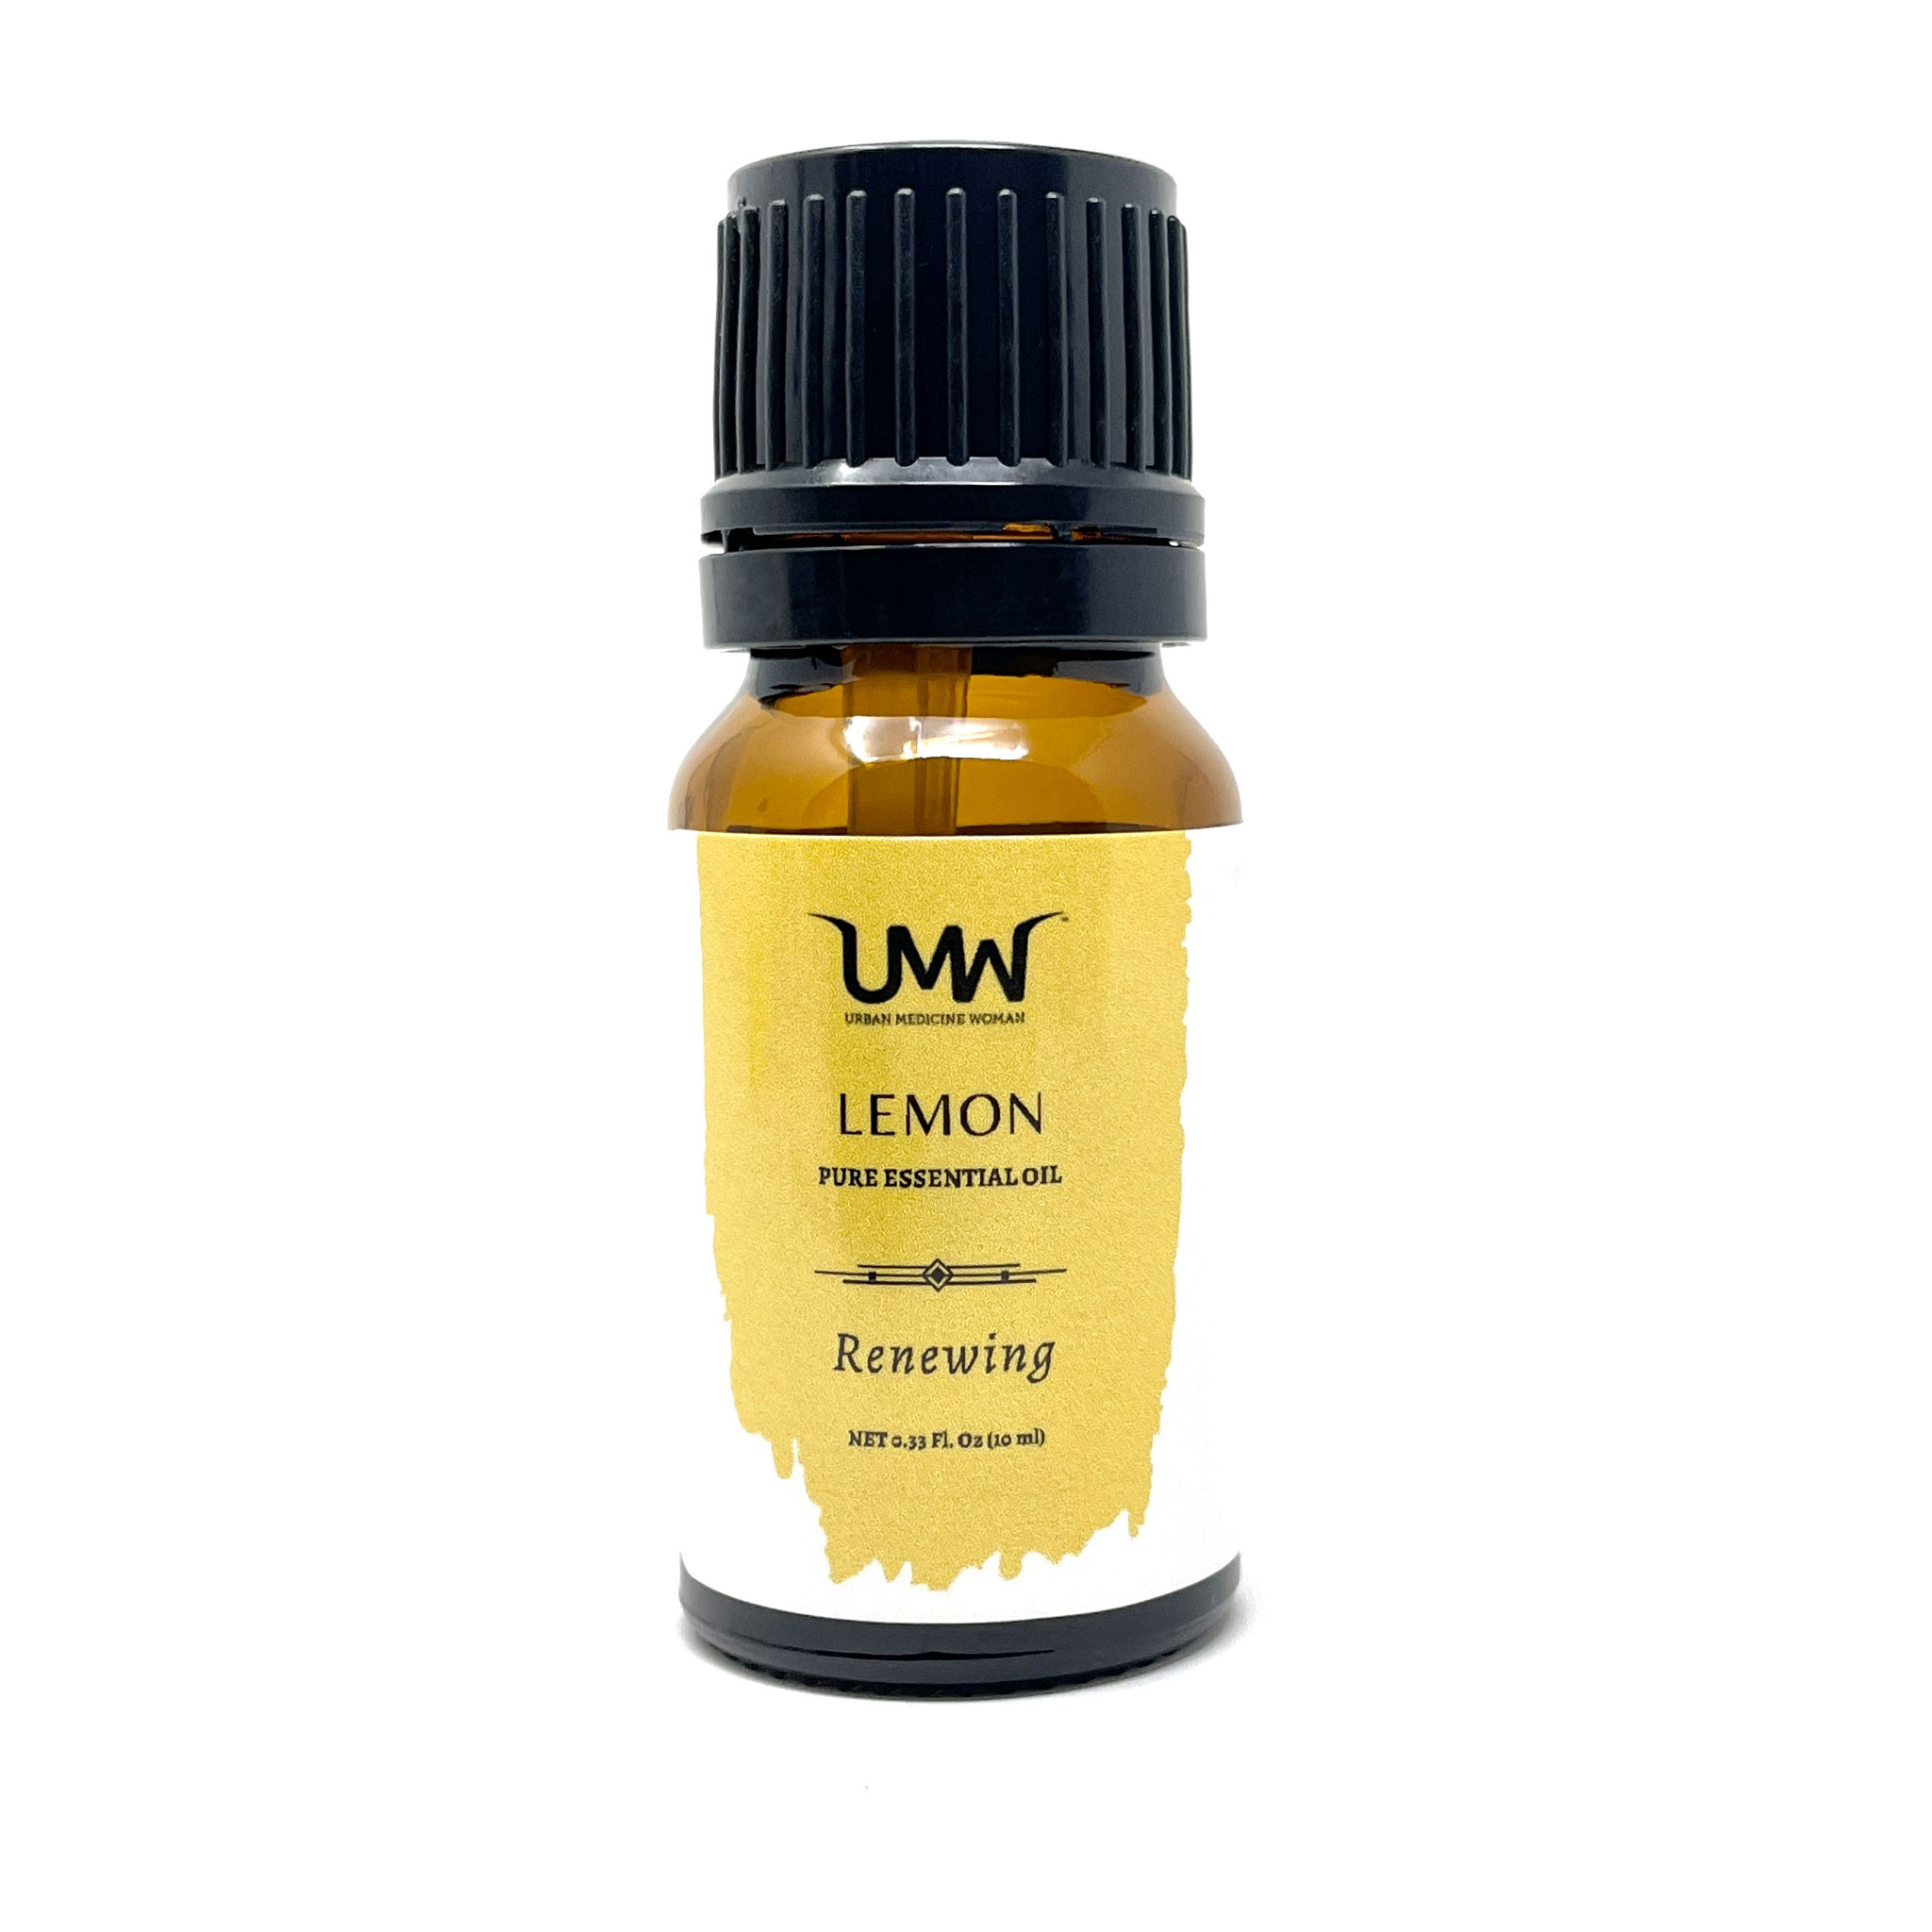 Urban Medicine Woman - Lemon Essential Oil